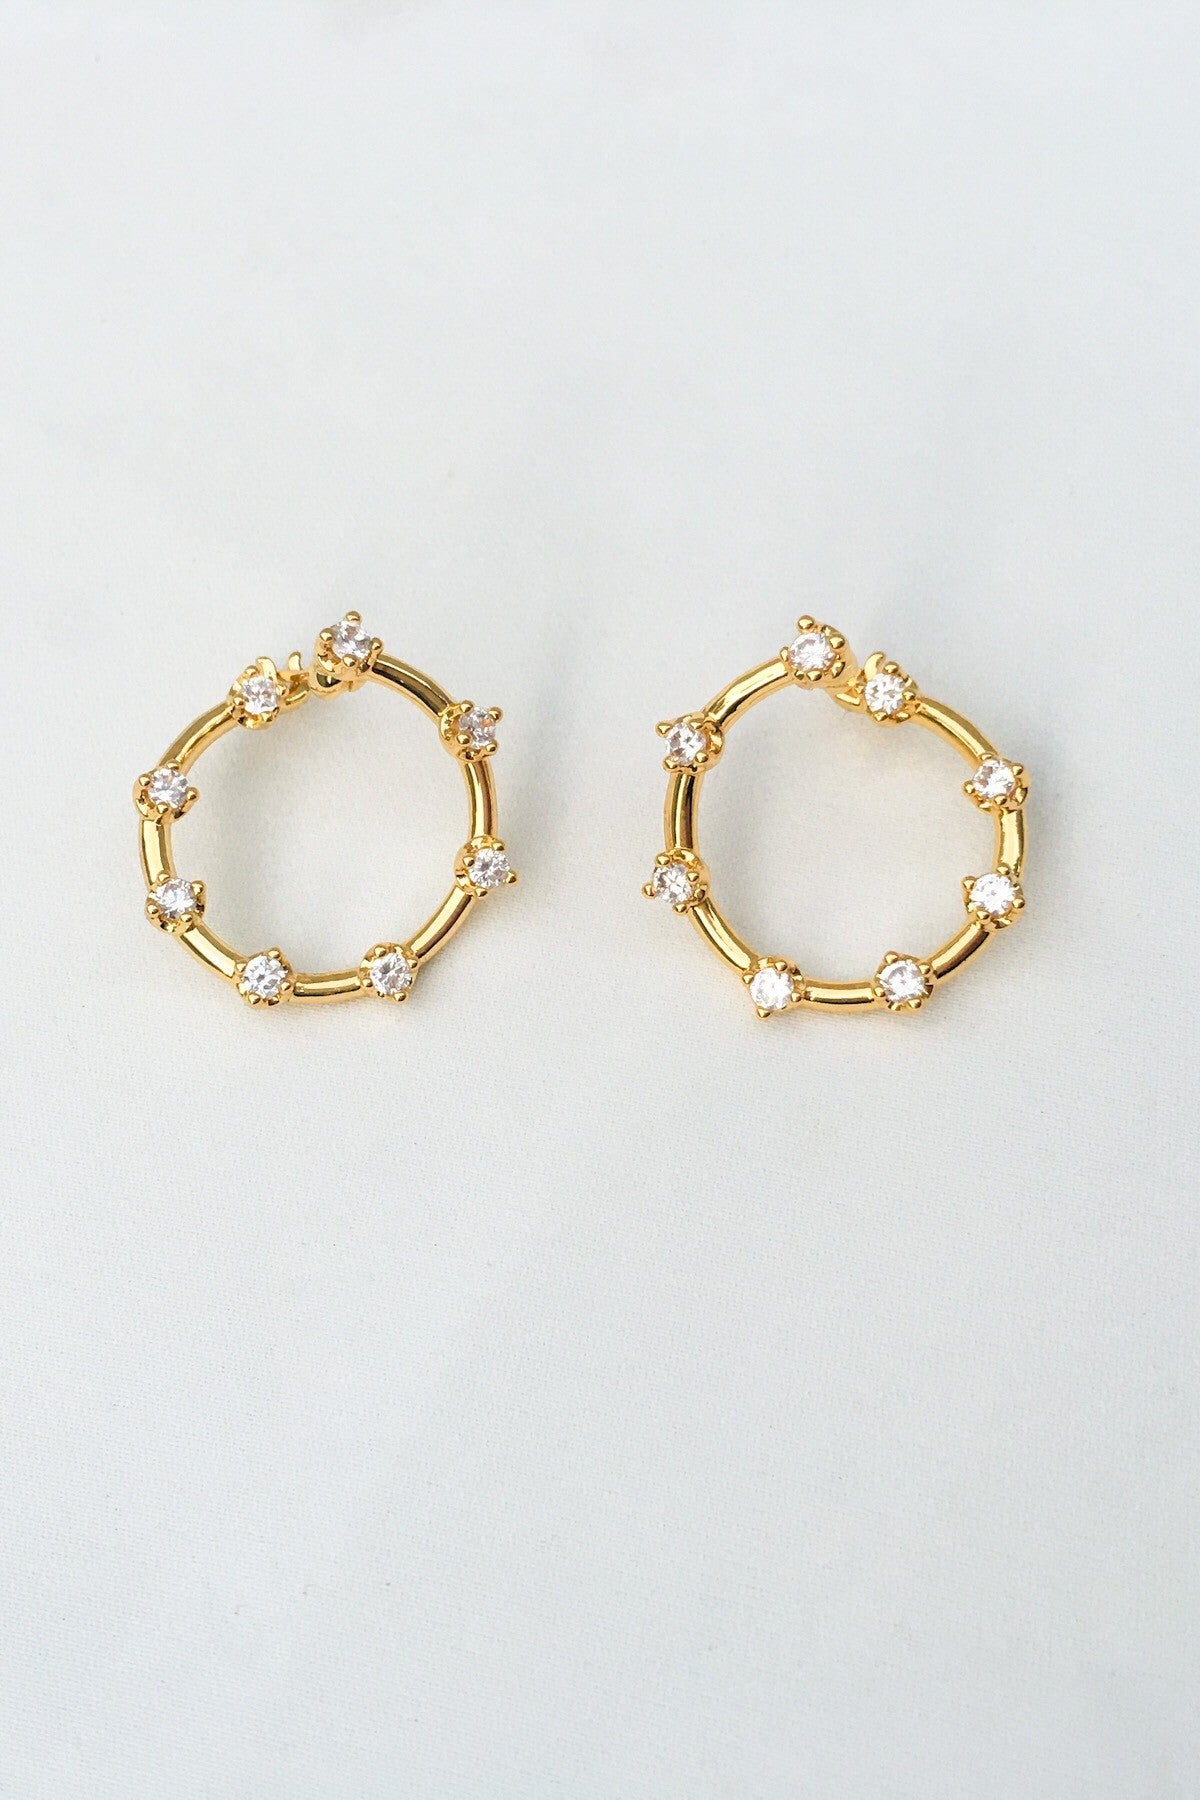 SKYE San Francisco SF California shop ethical sustainable modern minimalist quality women jewelry Leonila 18K Gold Earrings circular diamond 4